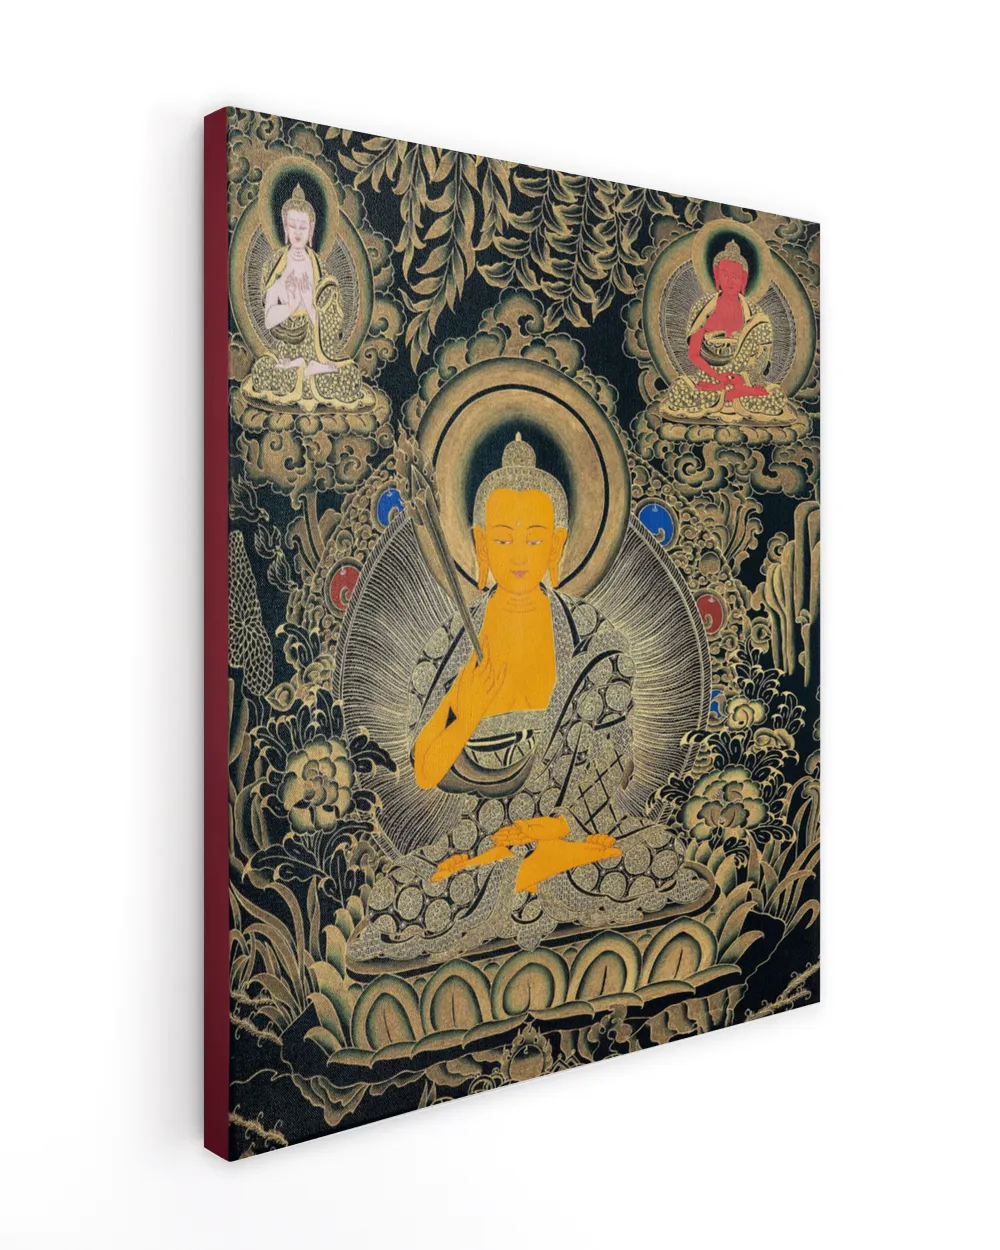 Shakyamuni Buddha Awakening Meditation for Enlightenment